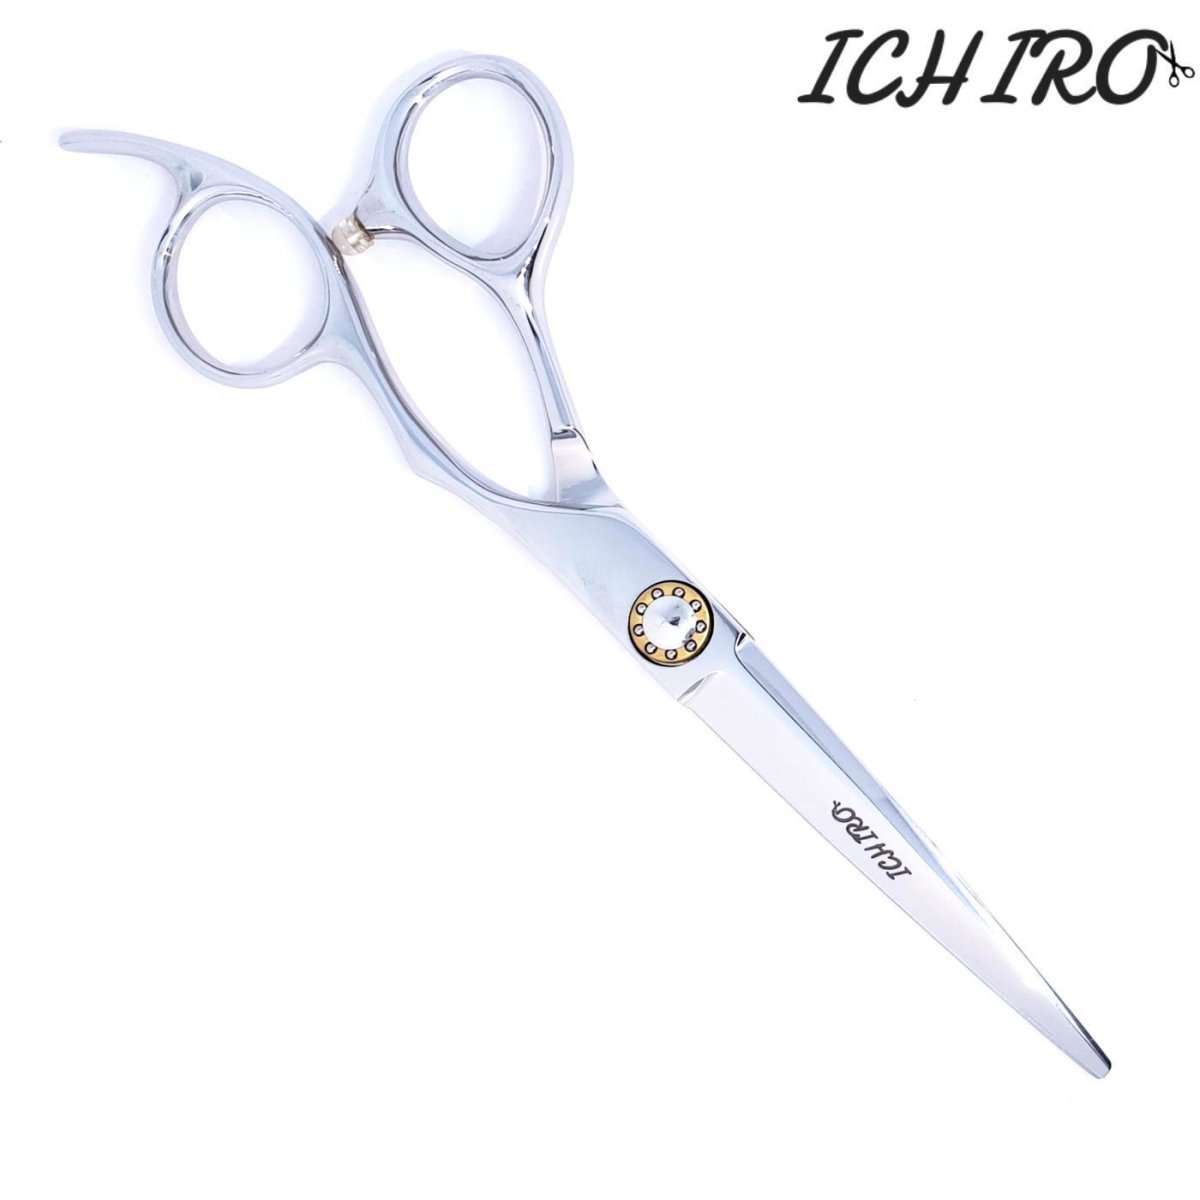 The Ichiro Offset Hair Cutting Scissors